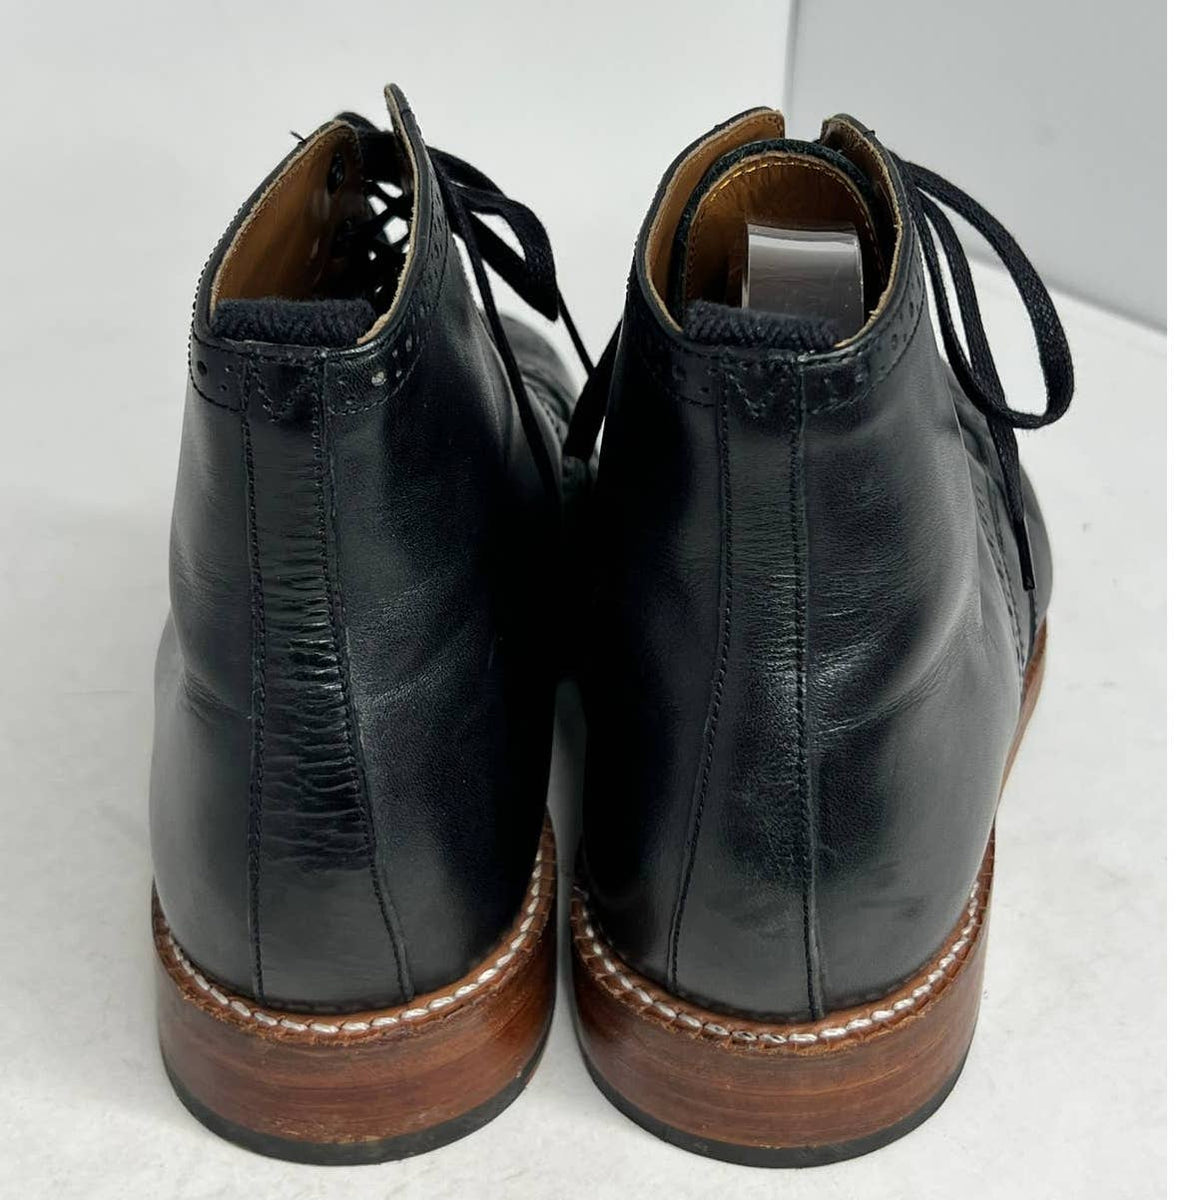 Grenson Black Leather Oxford Boots Sz.8.5